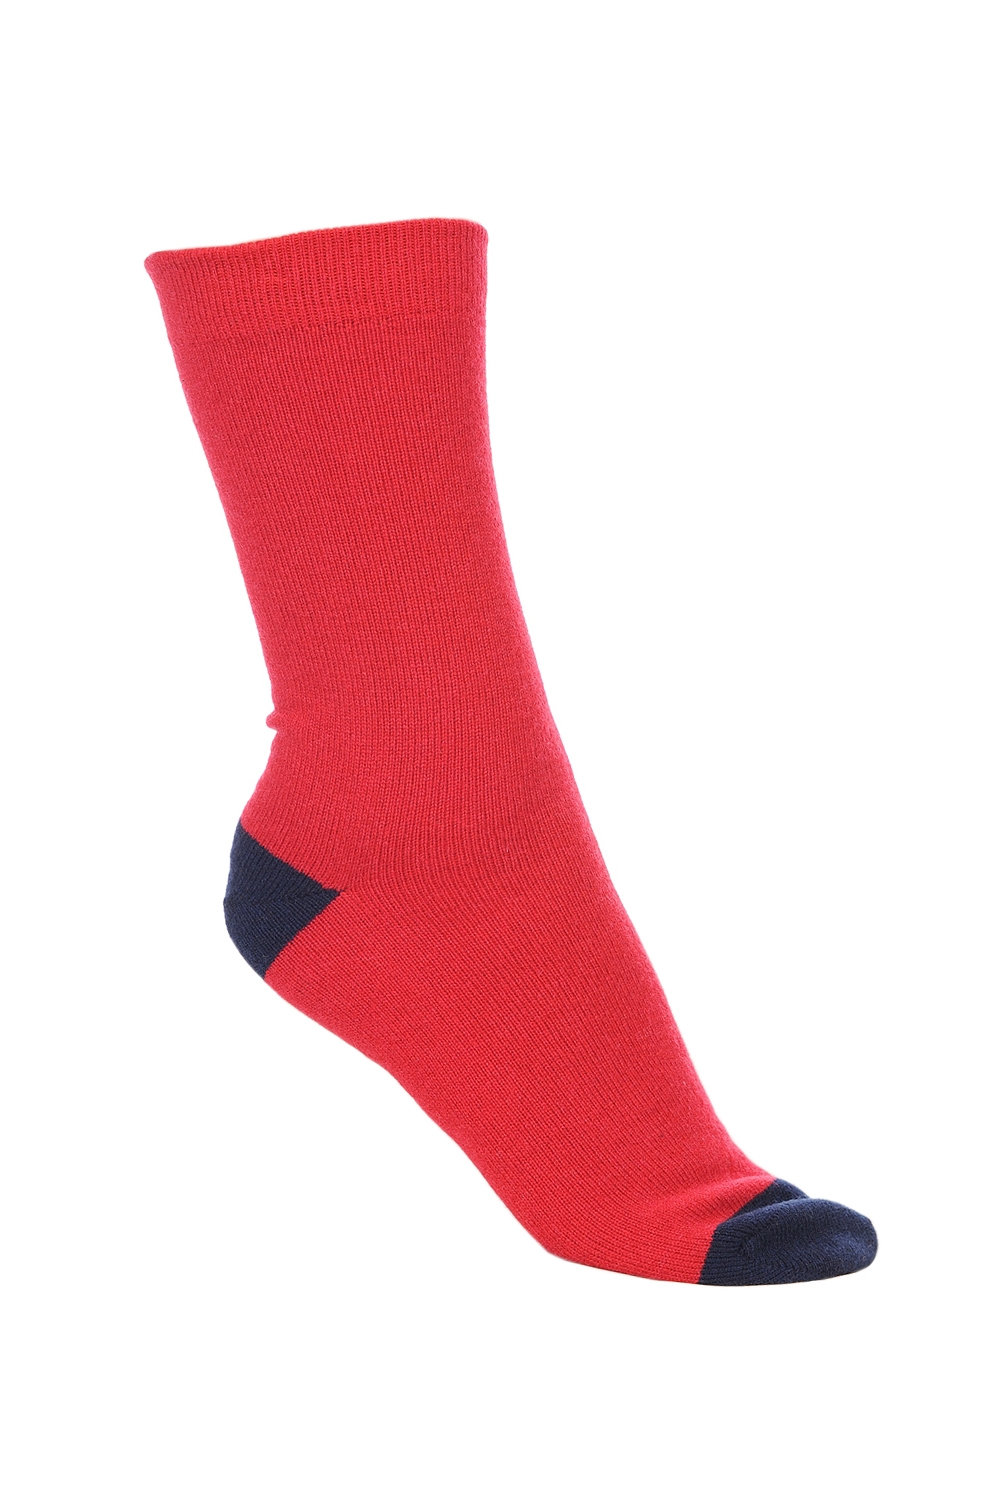 Cashmere & Elastane accessories socks frontibus blood red dress blue 9 11